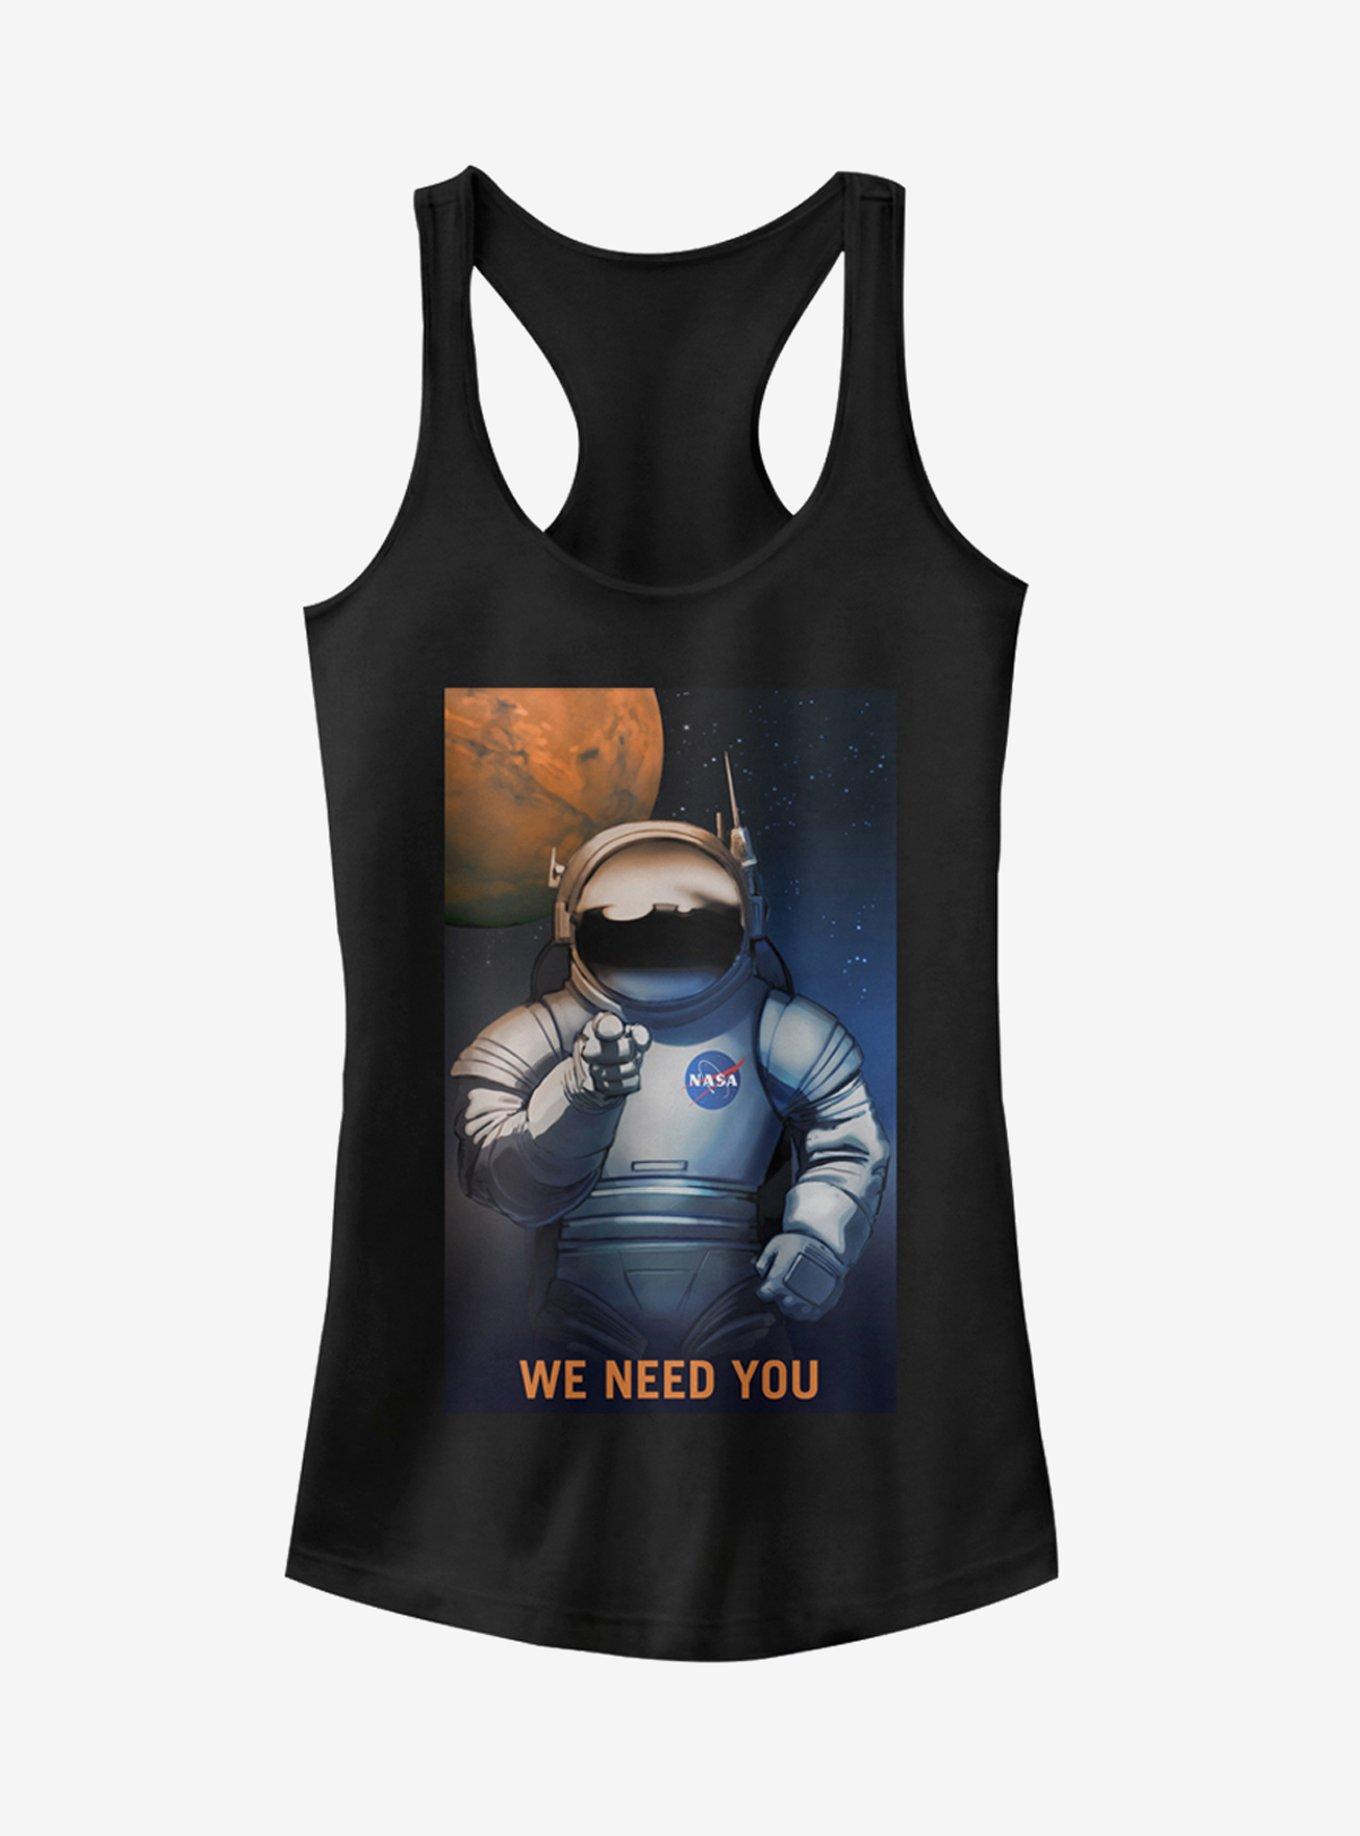 NASA Mars Needs You Girls T-Shirt